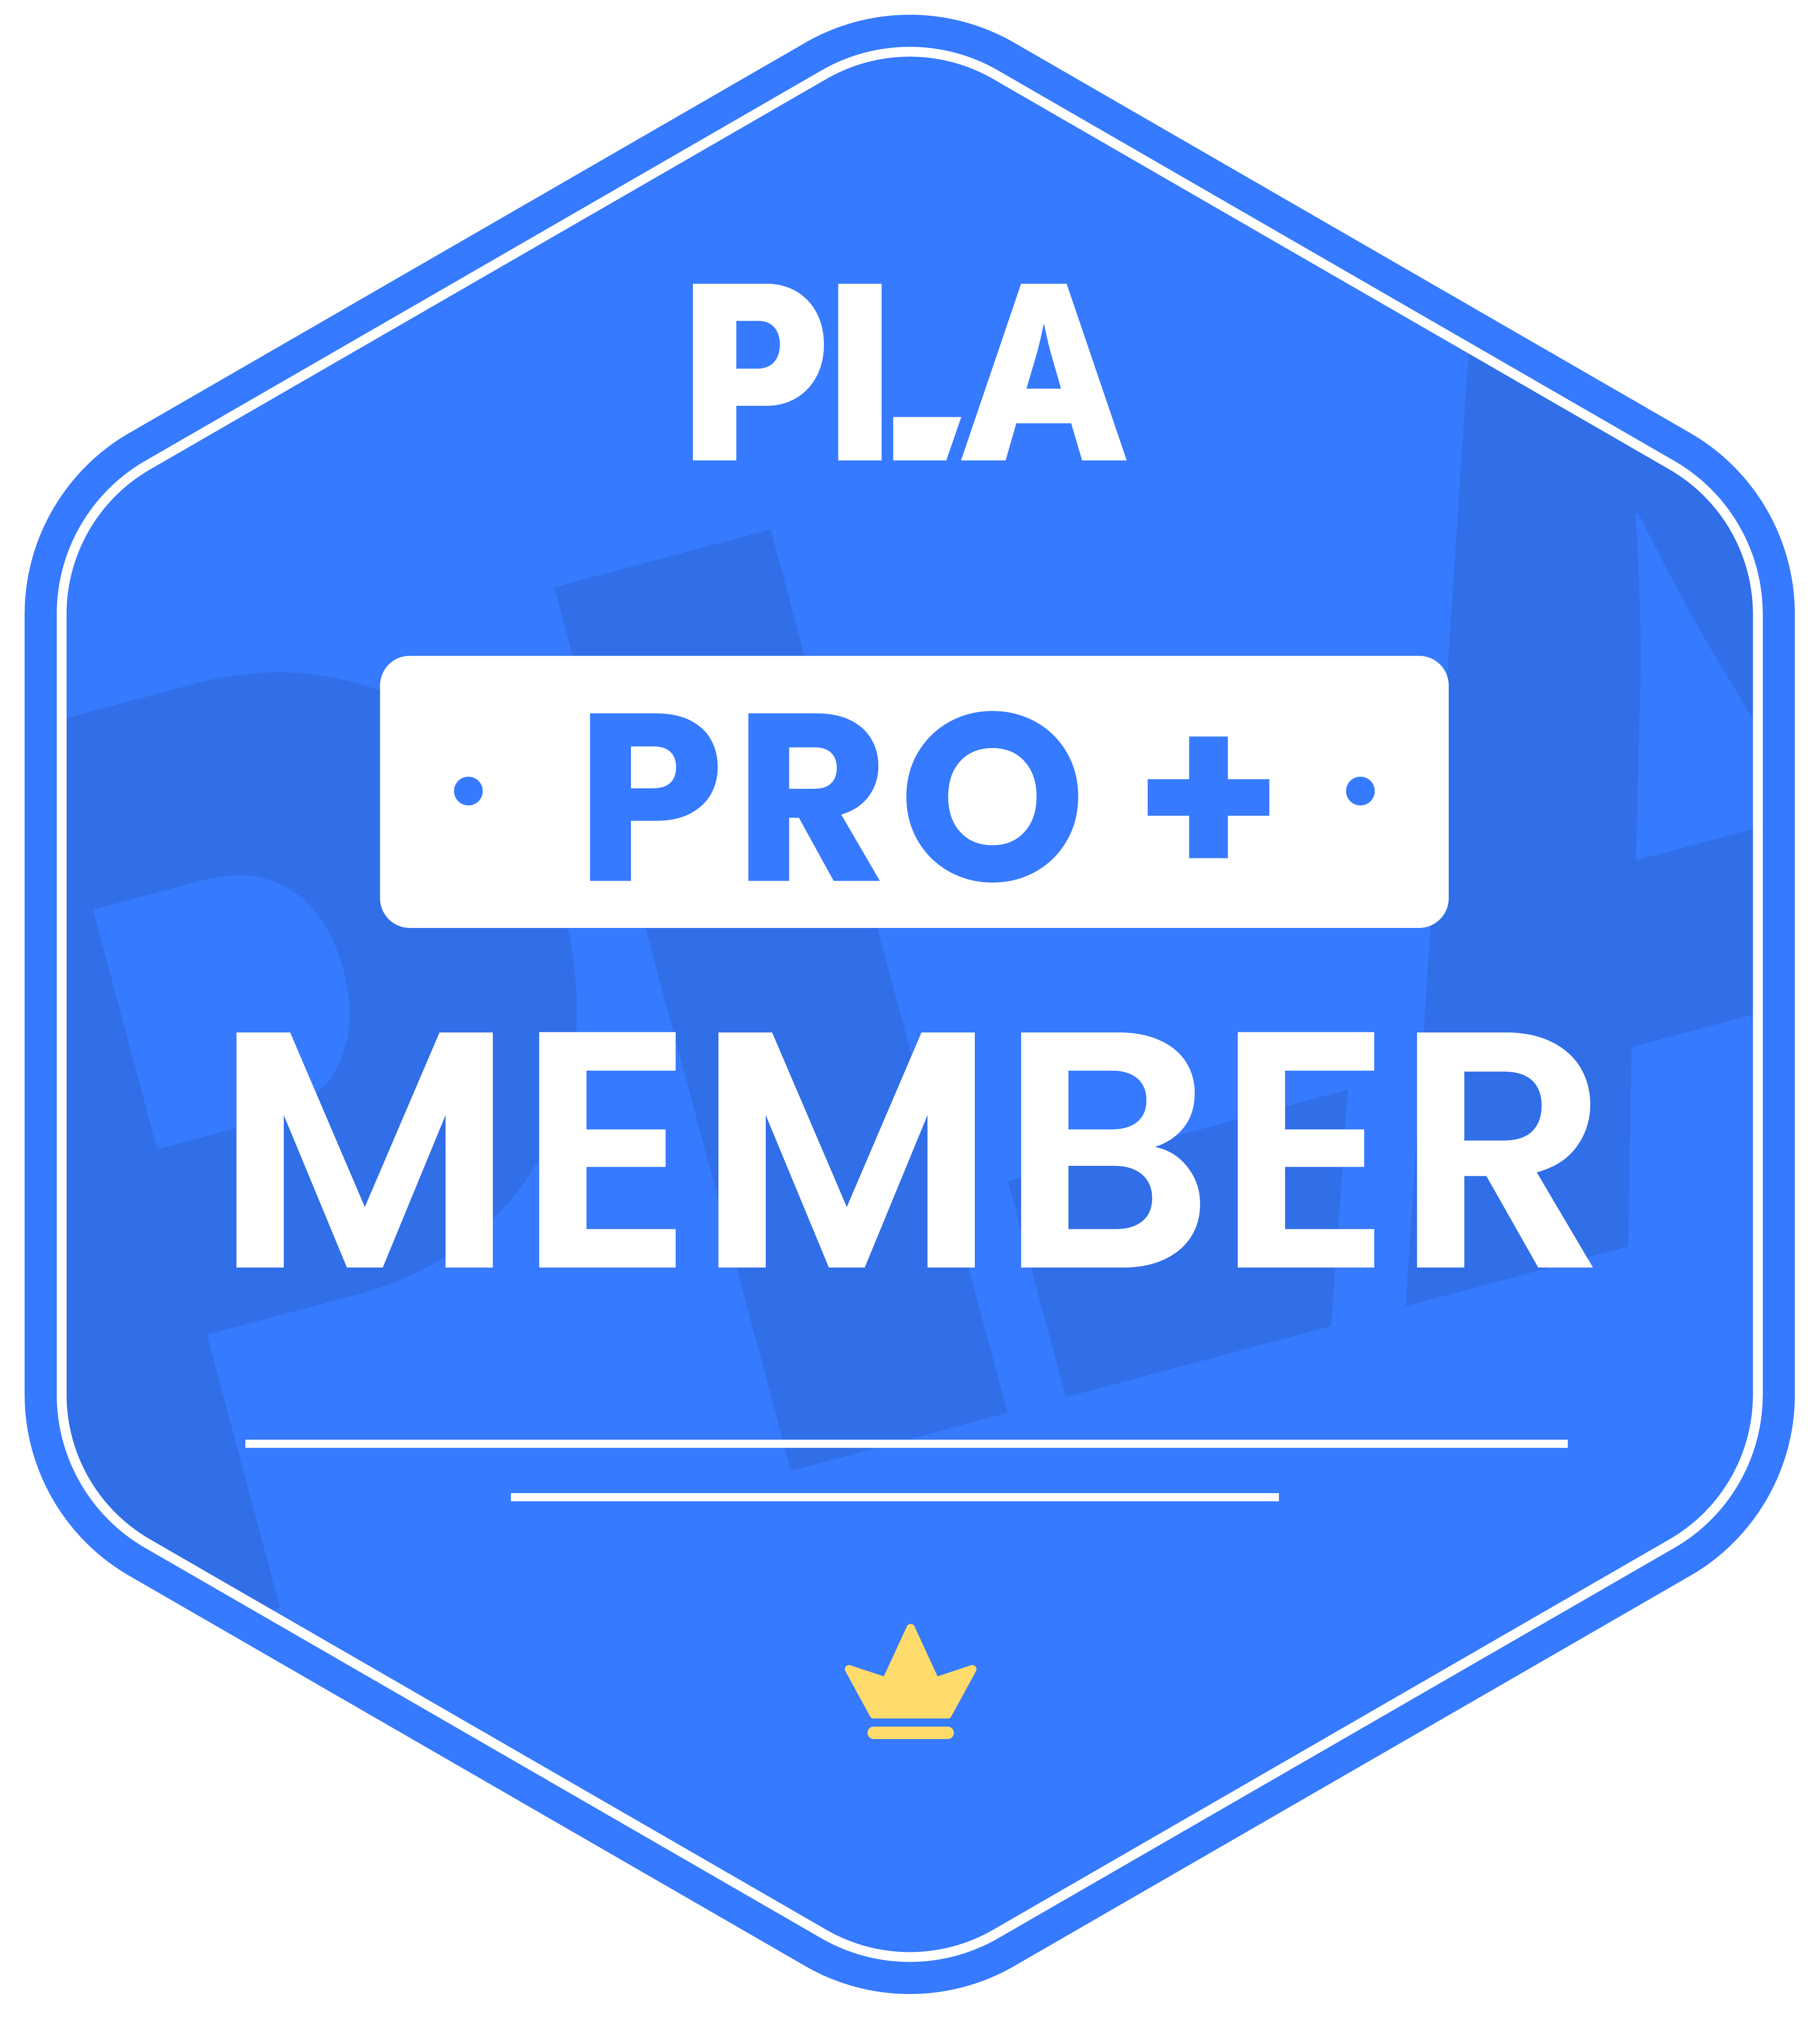 product led alliance pro plus membership badge